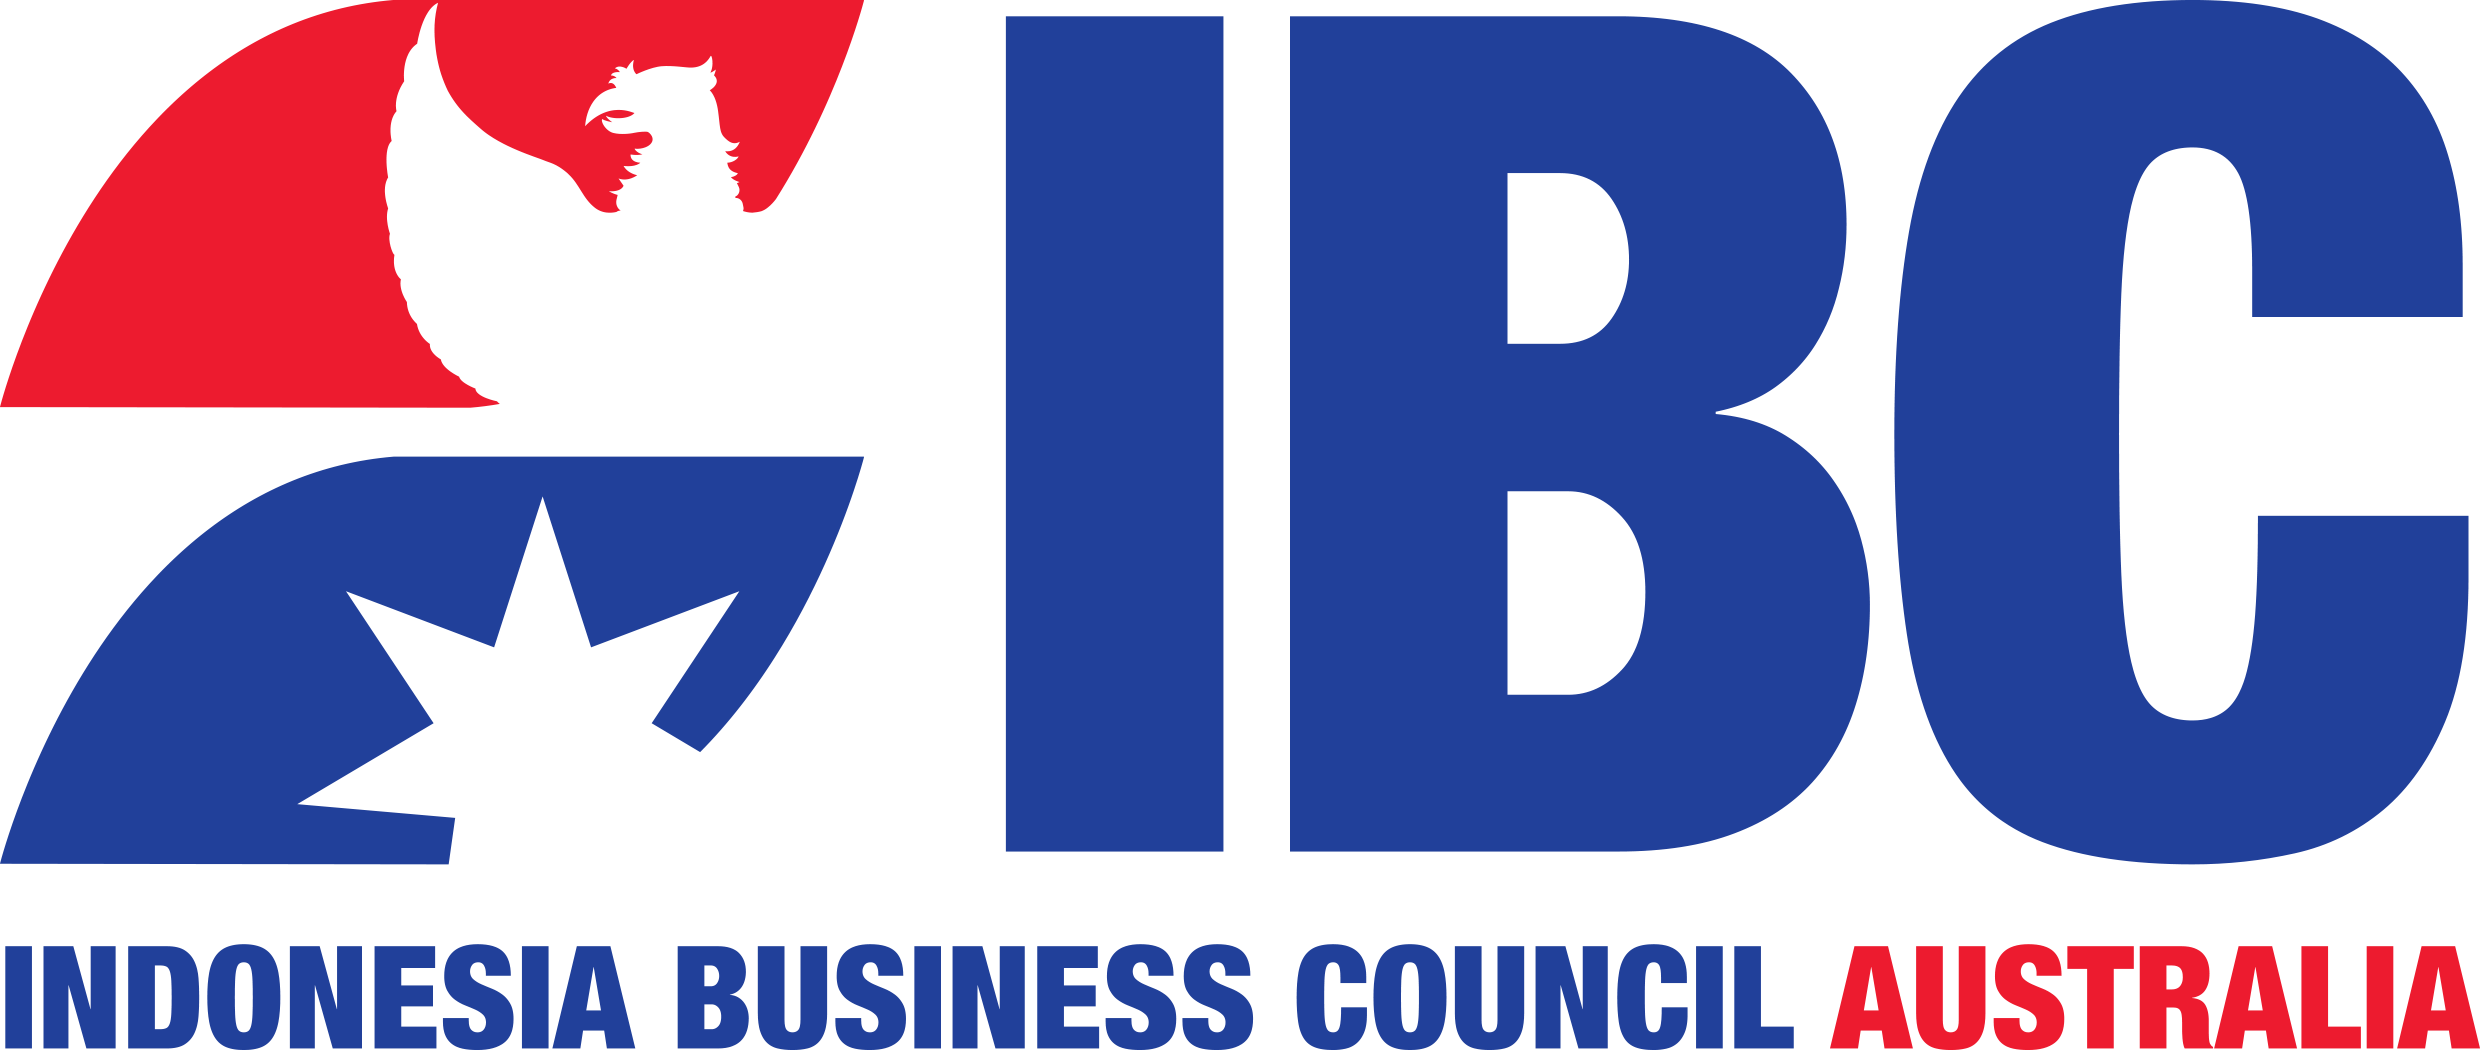 Indonesia Business Council Australia